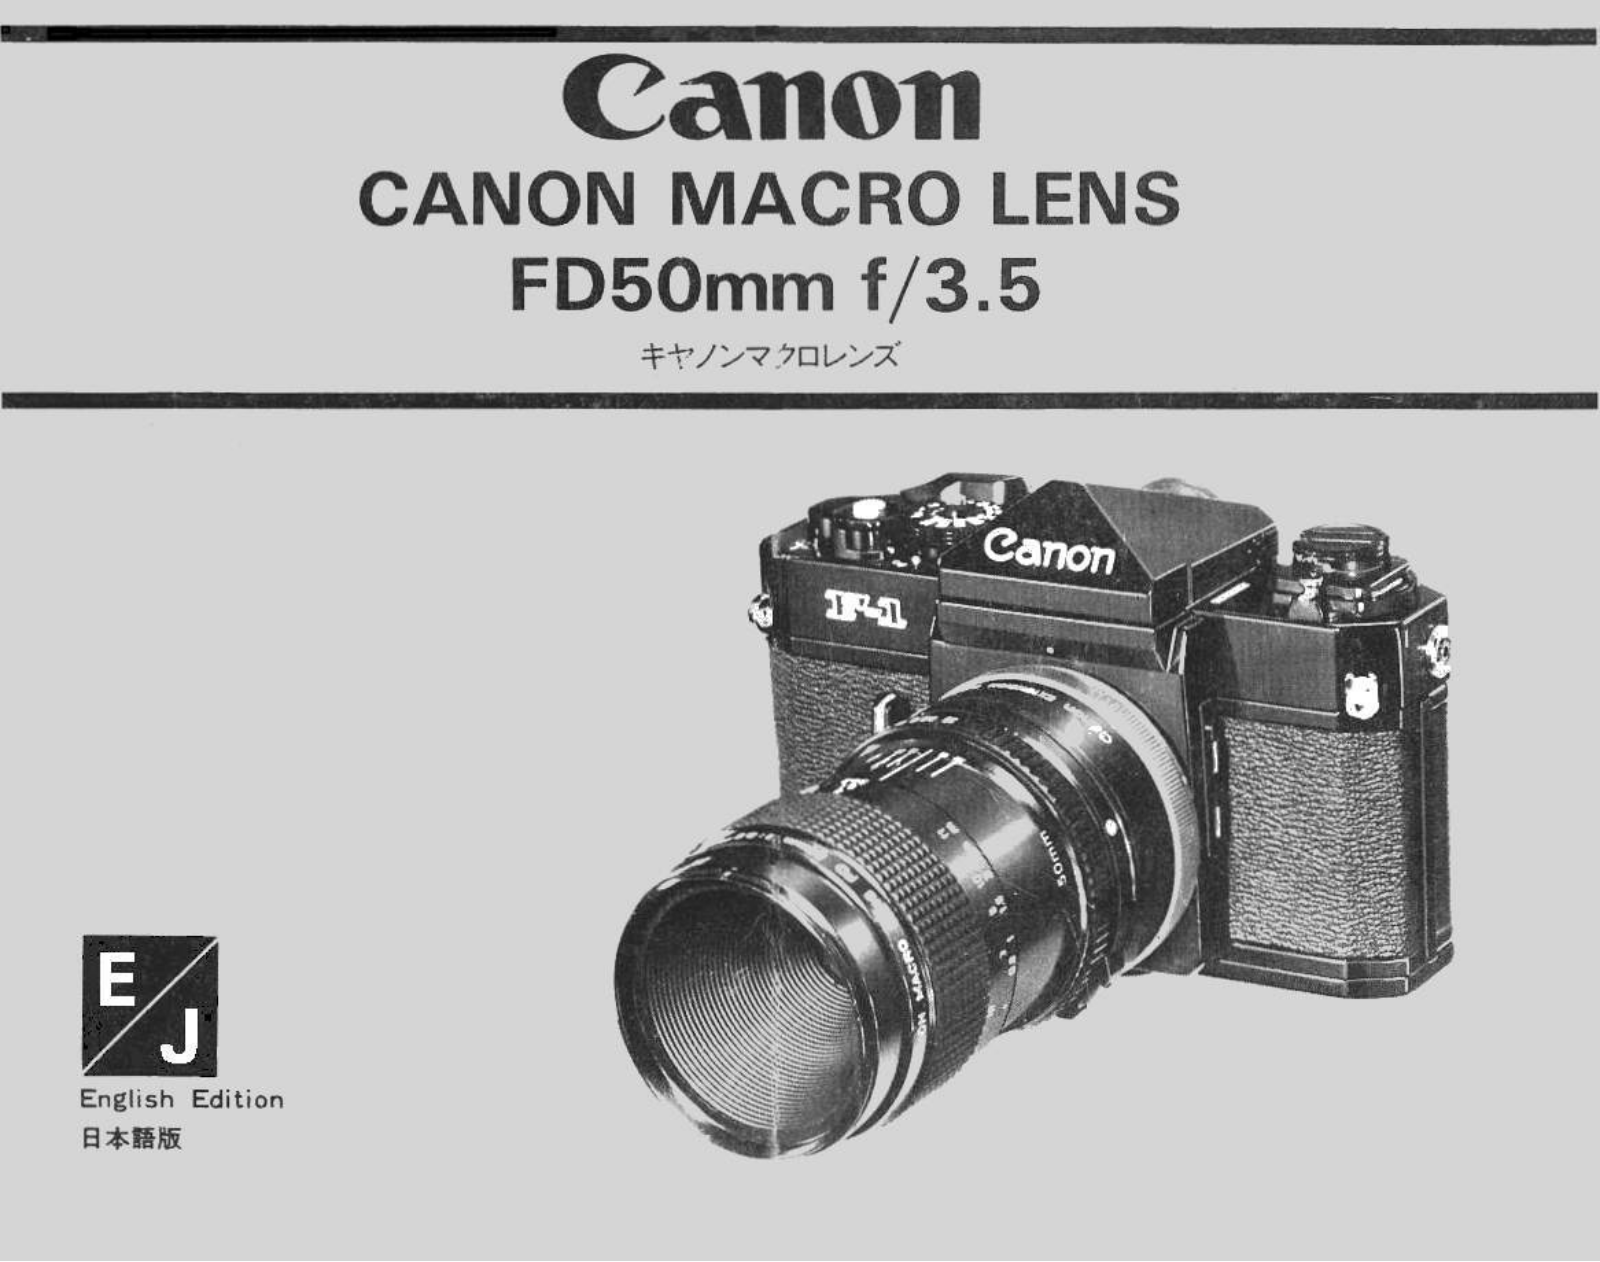 Canon FD50mm f/3.5 Instruction